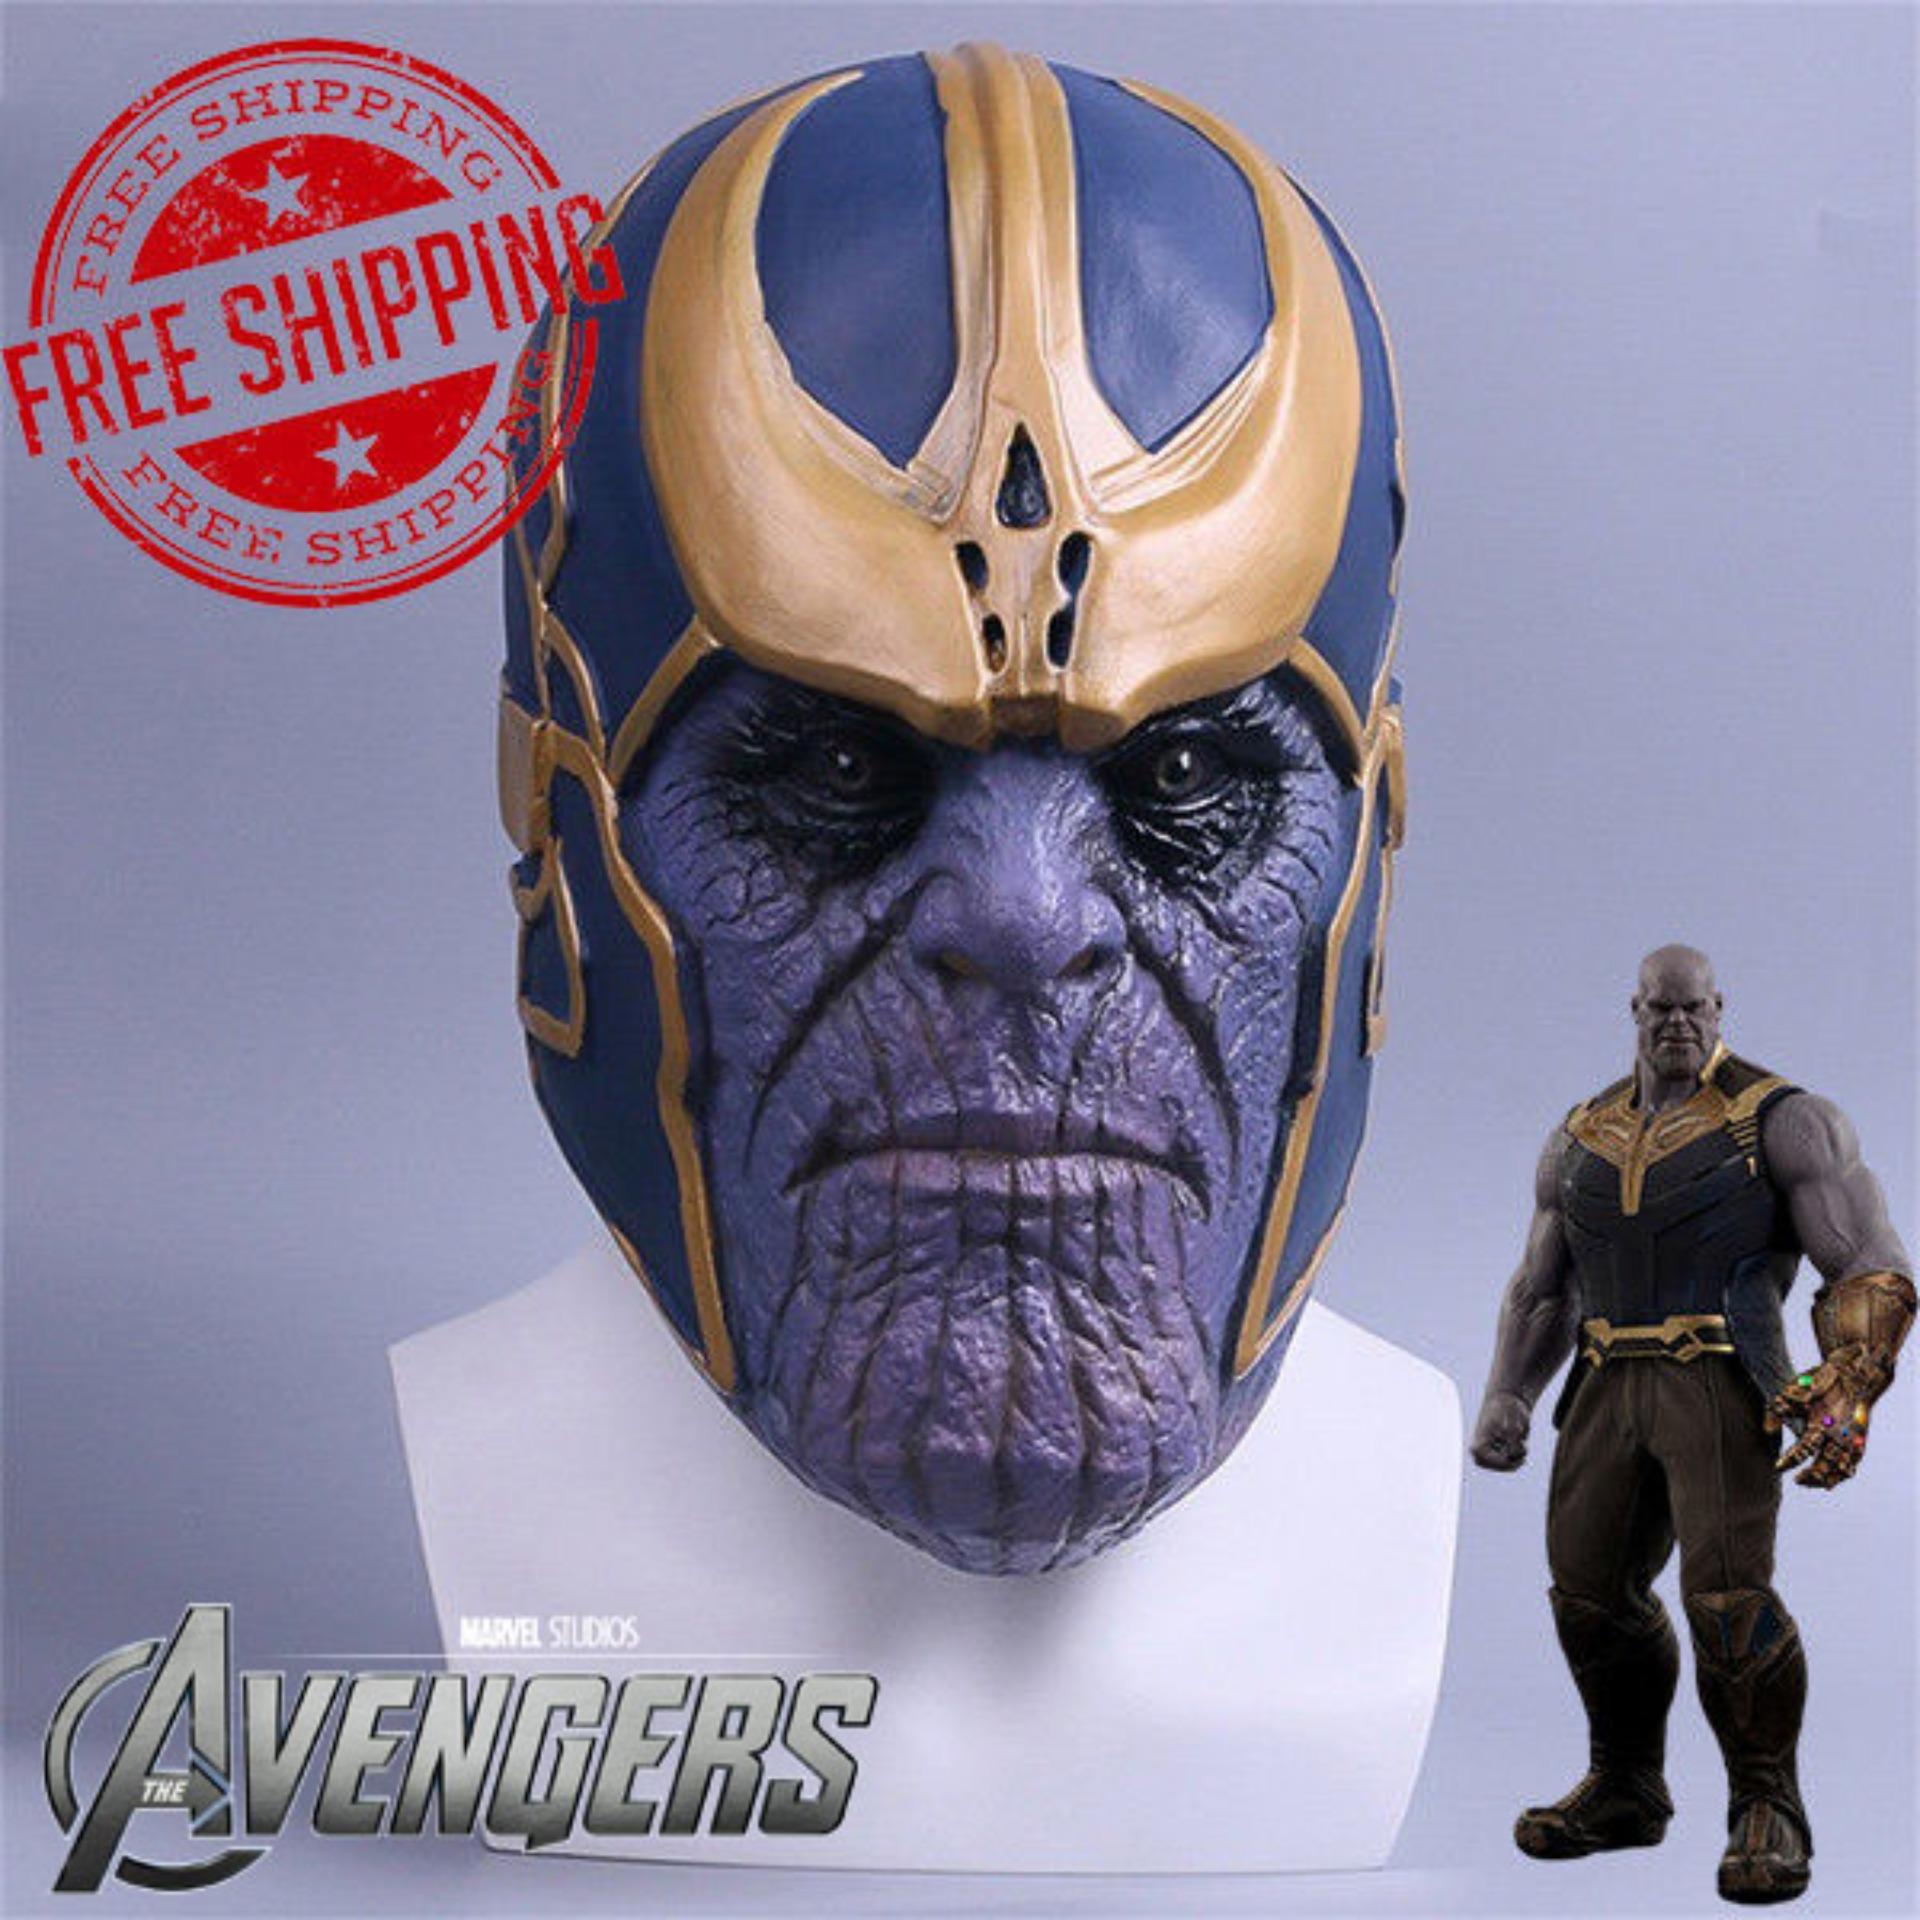 JAPAN Mask Hot หน้ากาก Thanos ทานอส จากเรื่อง Avengers อเวนเจอร์ส รุ่น มีตาปลอม สุดโหด วัสดุ Emulsion อิมัลชัน น้ำยางธรรมชาติเป็นมิตรต่อสิ่งแวดล้อม คอลเลคชั่นของสะสม ไส่เล่น BB GUN บีบีกัน Cosplay คอสเพลย์ Halloween ฮาโลวีน